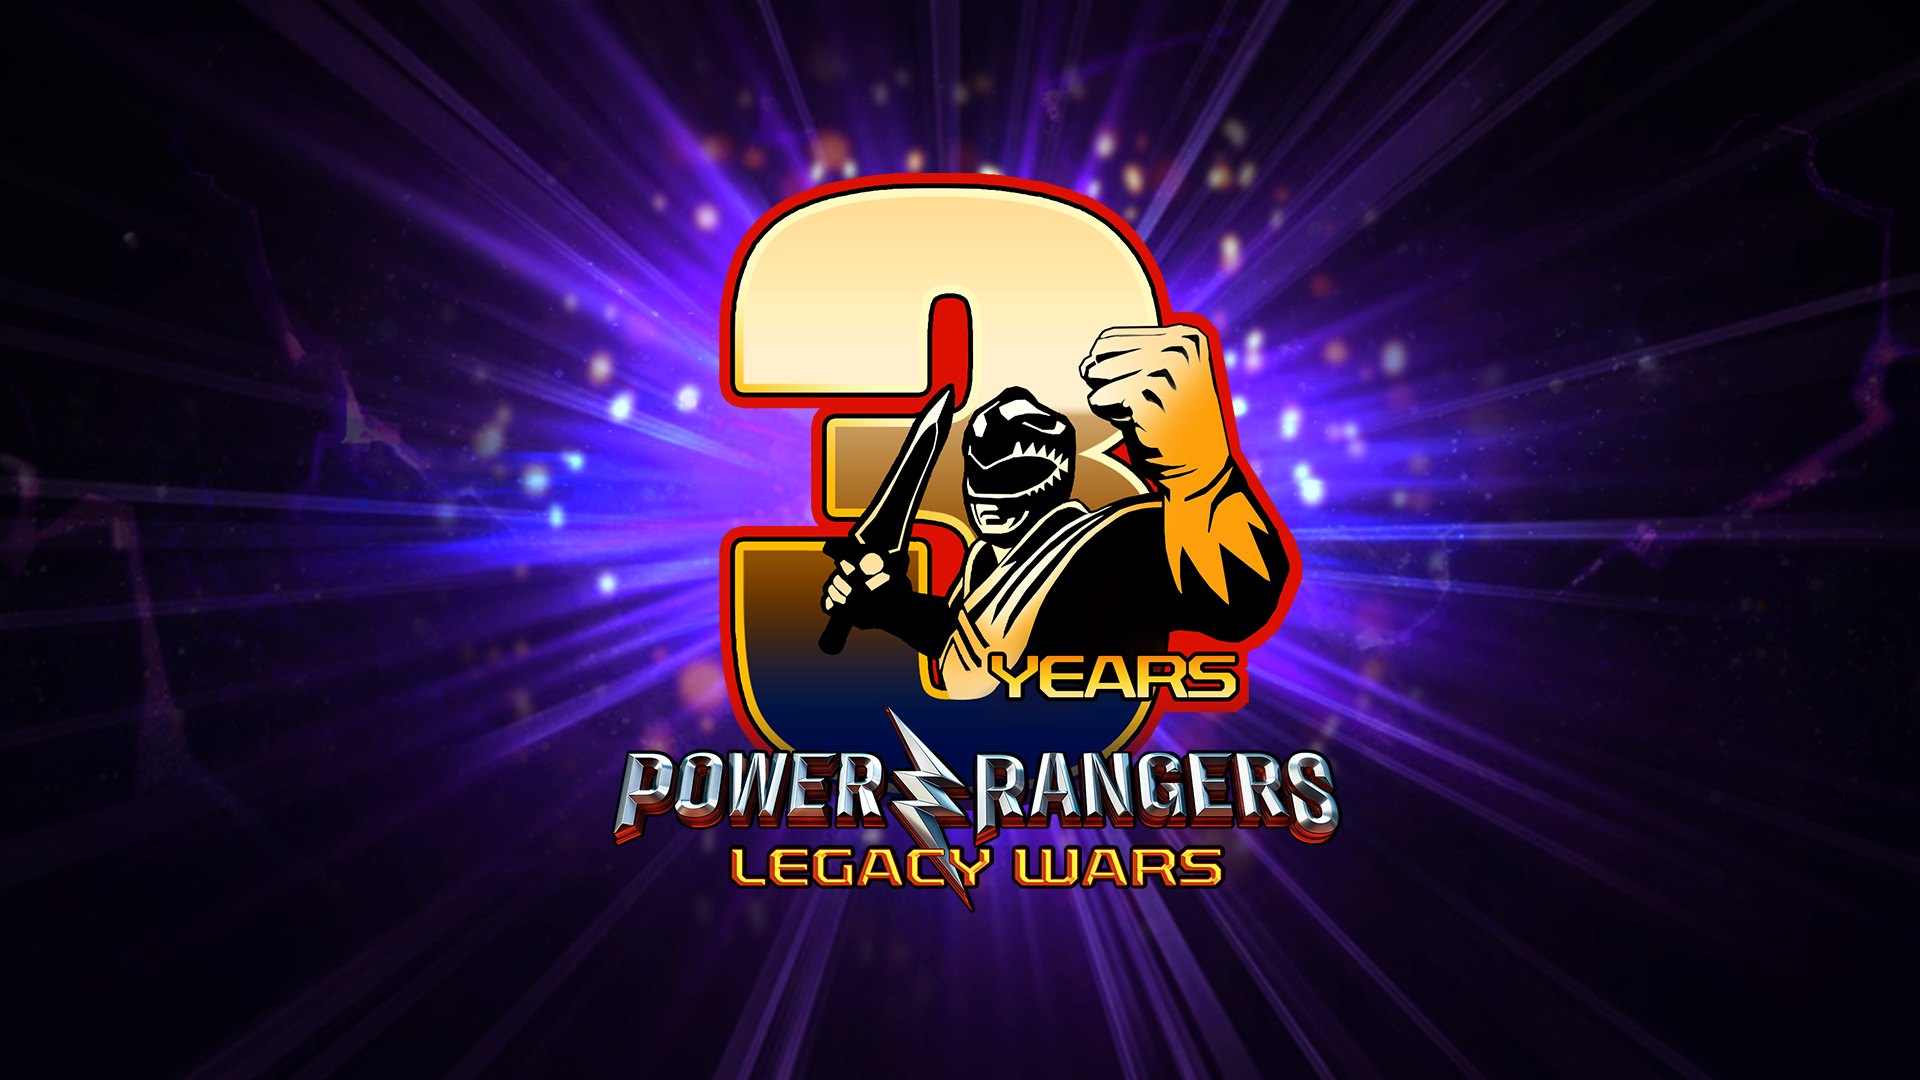 Power Rangers | Power Rangers: Legacy Wars turns 3 years old